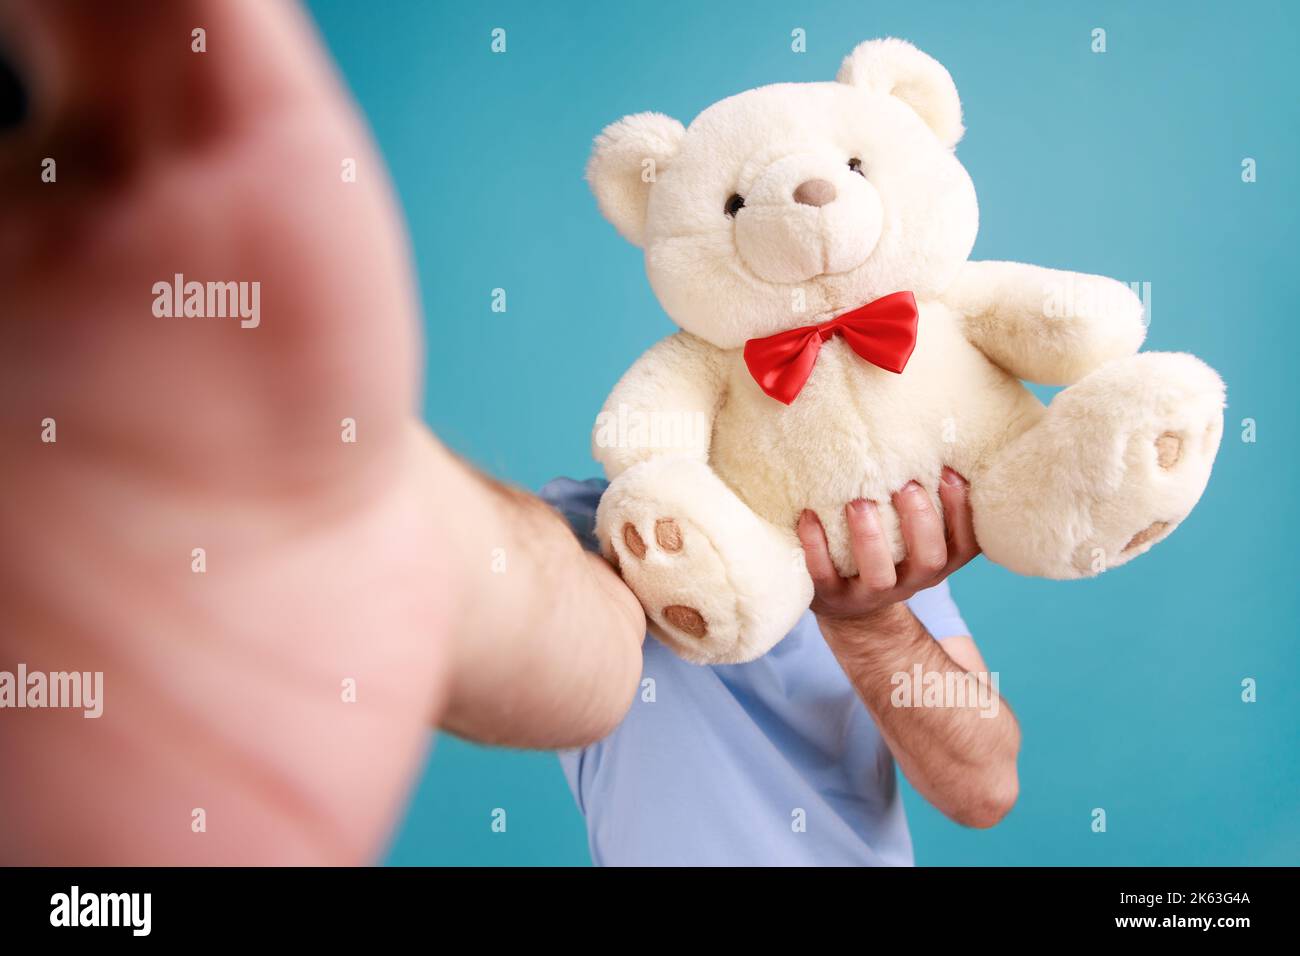 Girls With Teddy Bear / Photography Idea With Teddy Bear For Girl / Crazy  Poses With Cute Teddy bear - YouTube